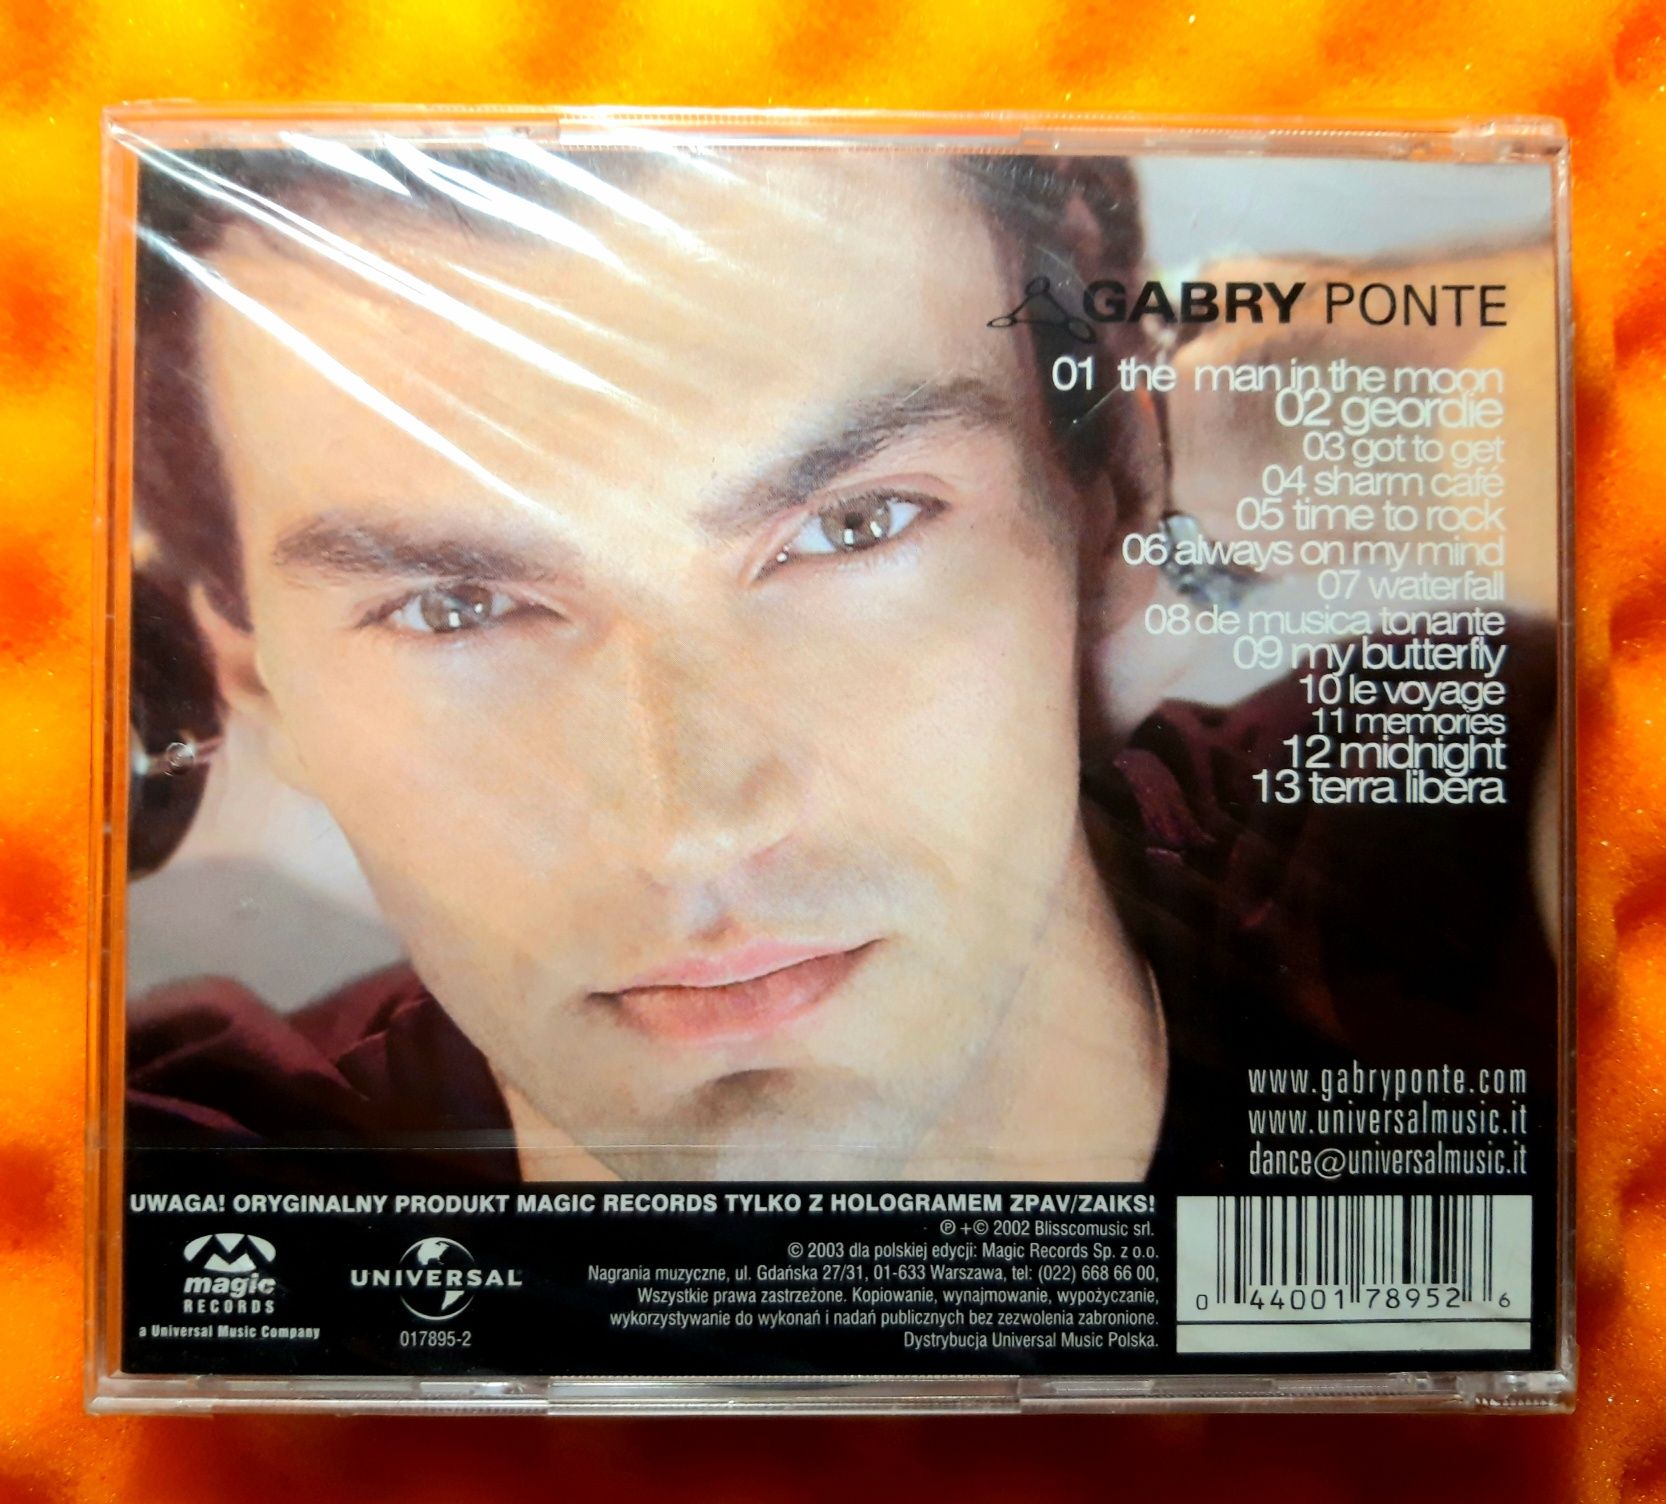 Gabry Ponte ‎– Gabry Ponte (CD, 2002, FOLIA)